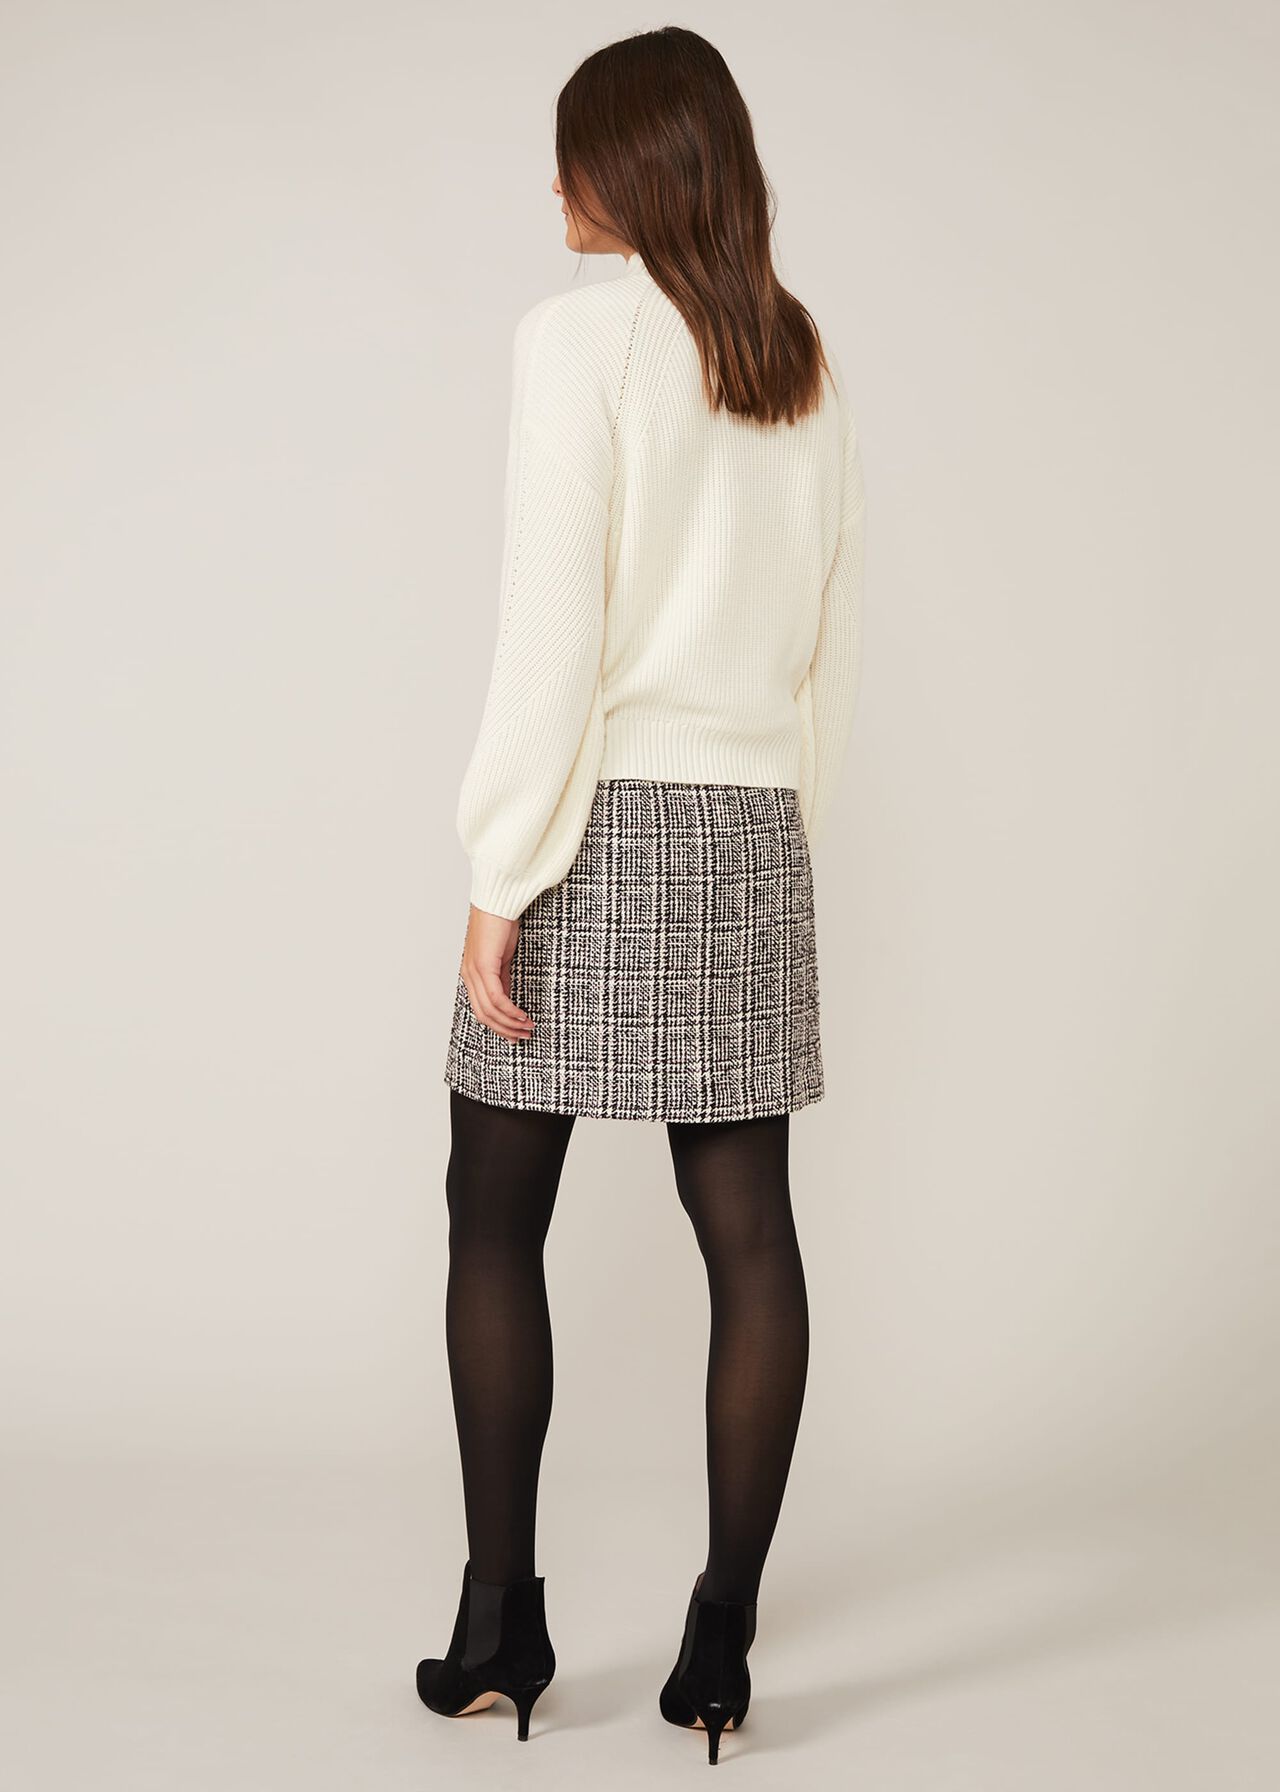 Marissa Tweed Skirt